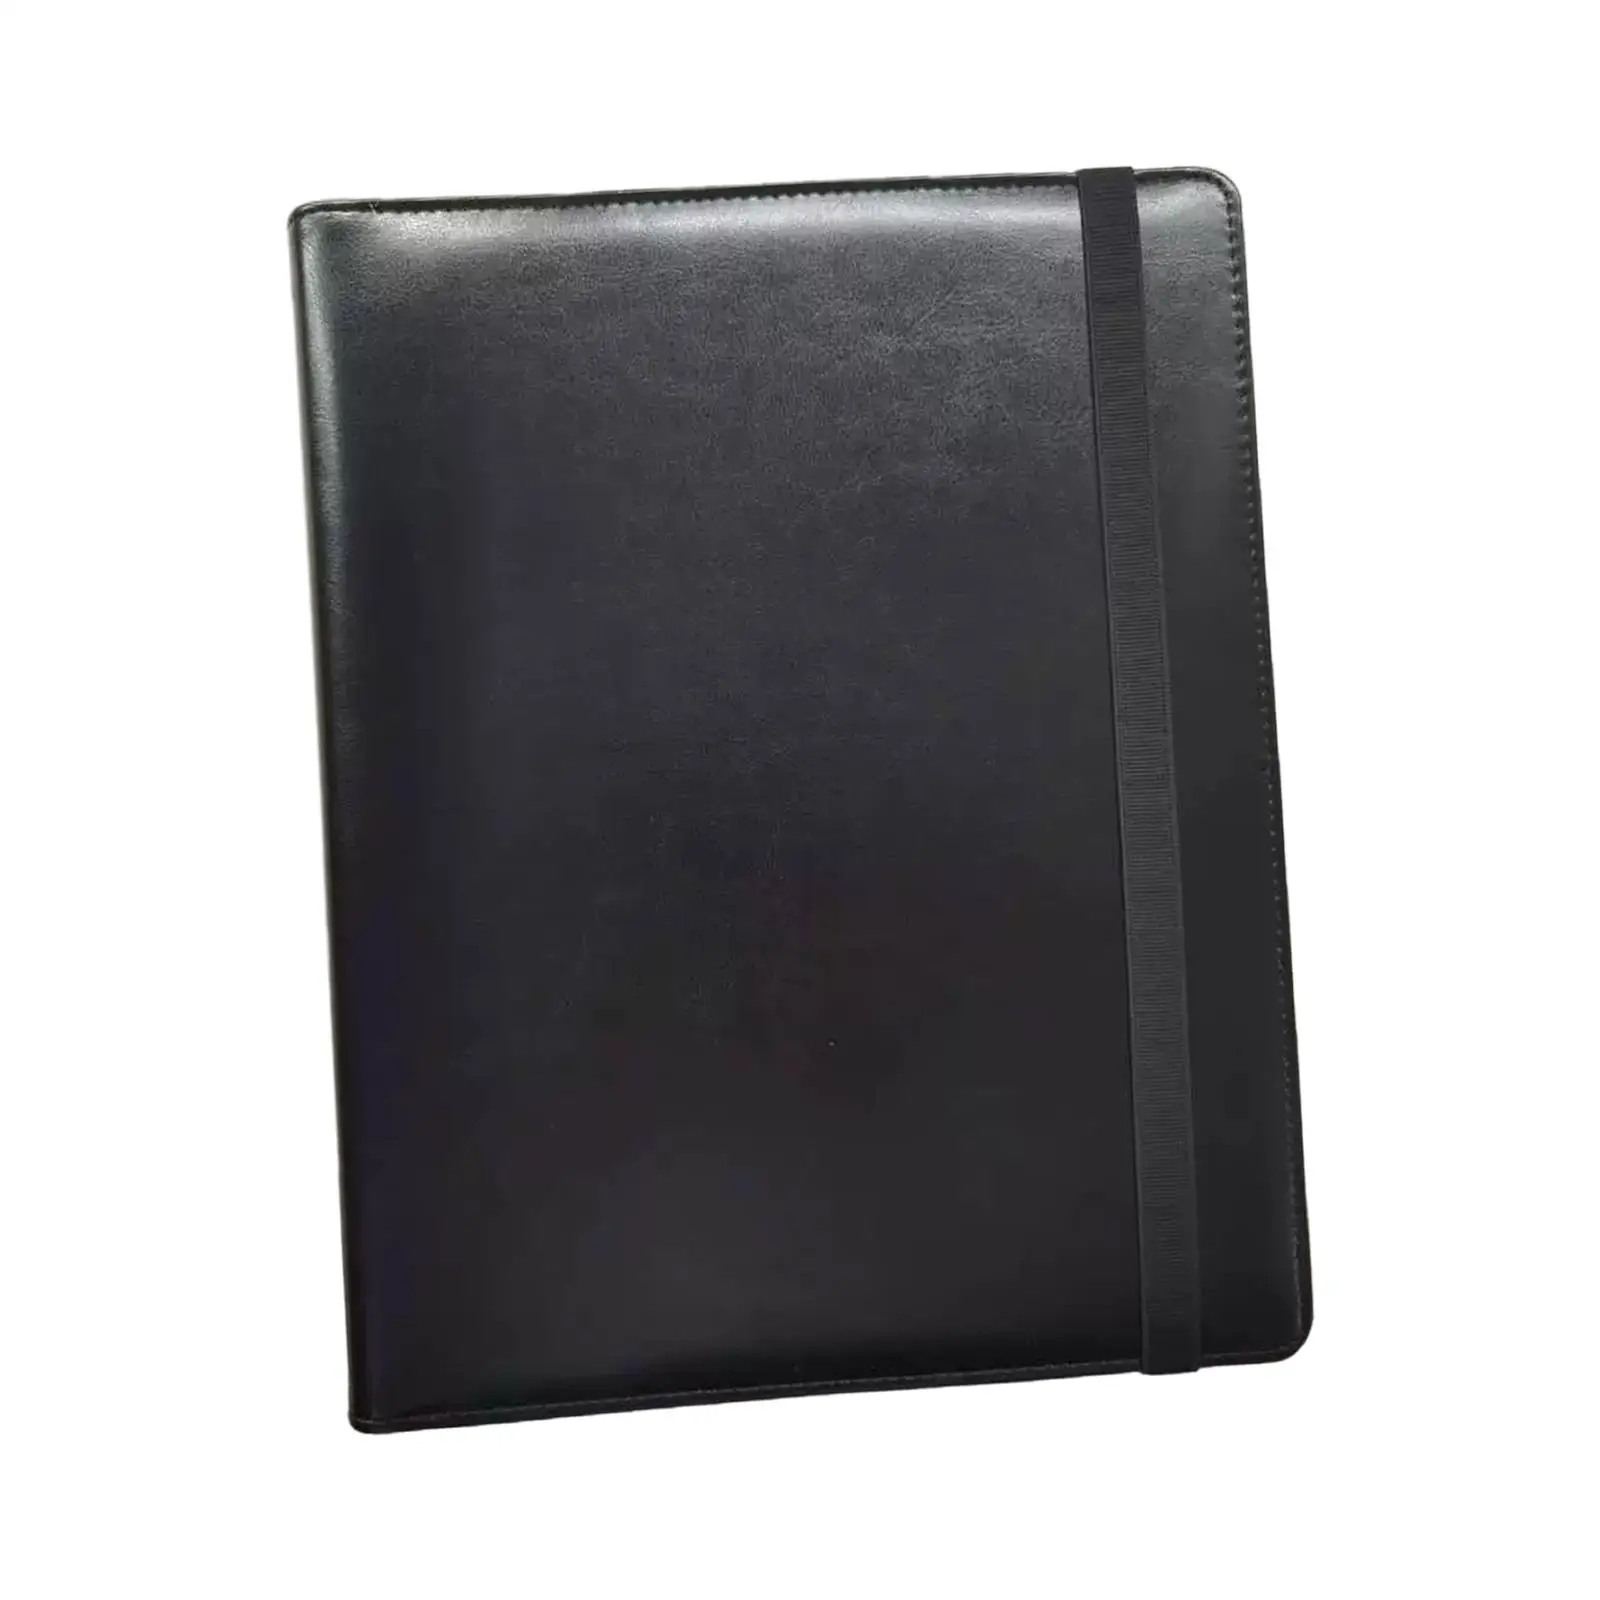 Trading Card Carrying Binder 9 Pockets Portable Sturdy Card Holder Folders Card Storage Album PU Leather Card Storage Case